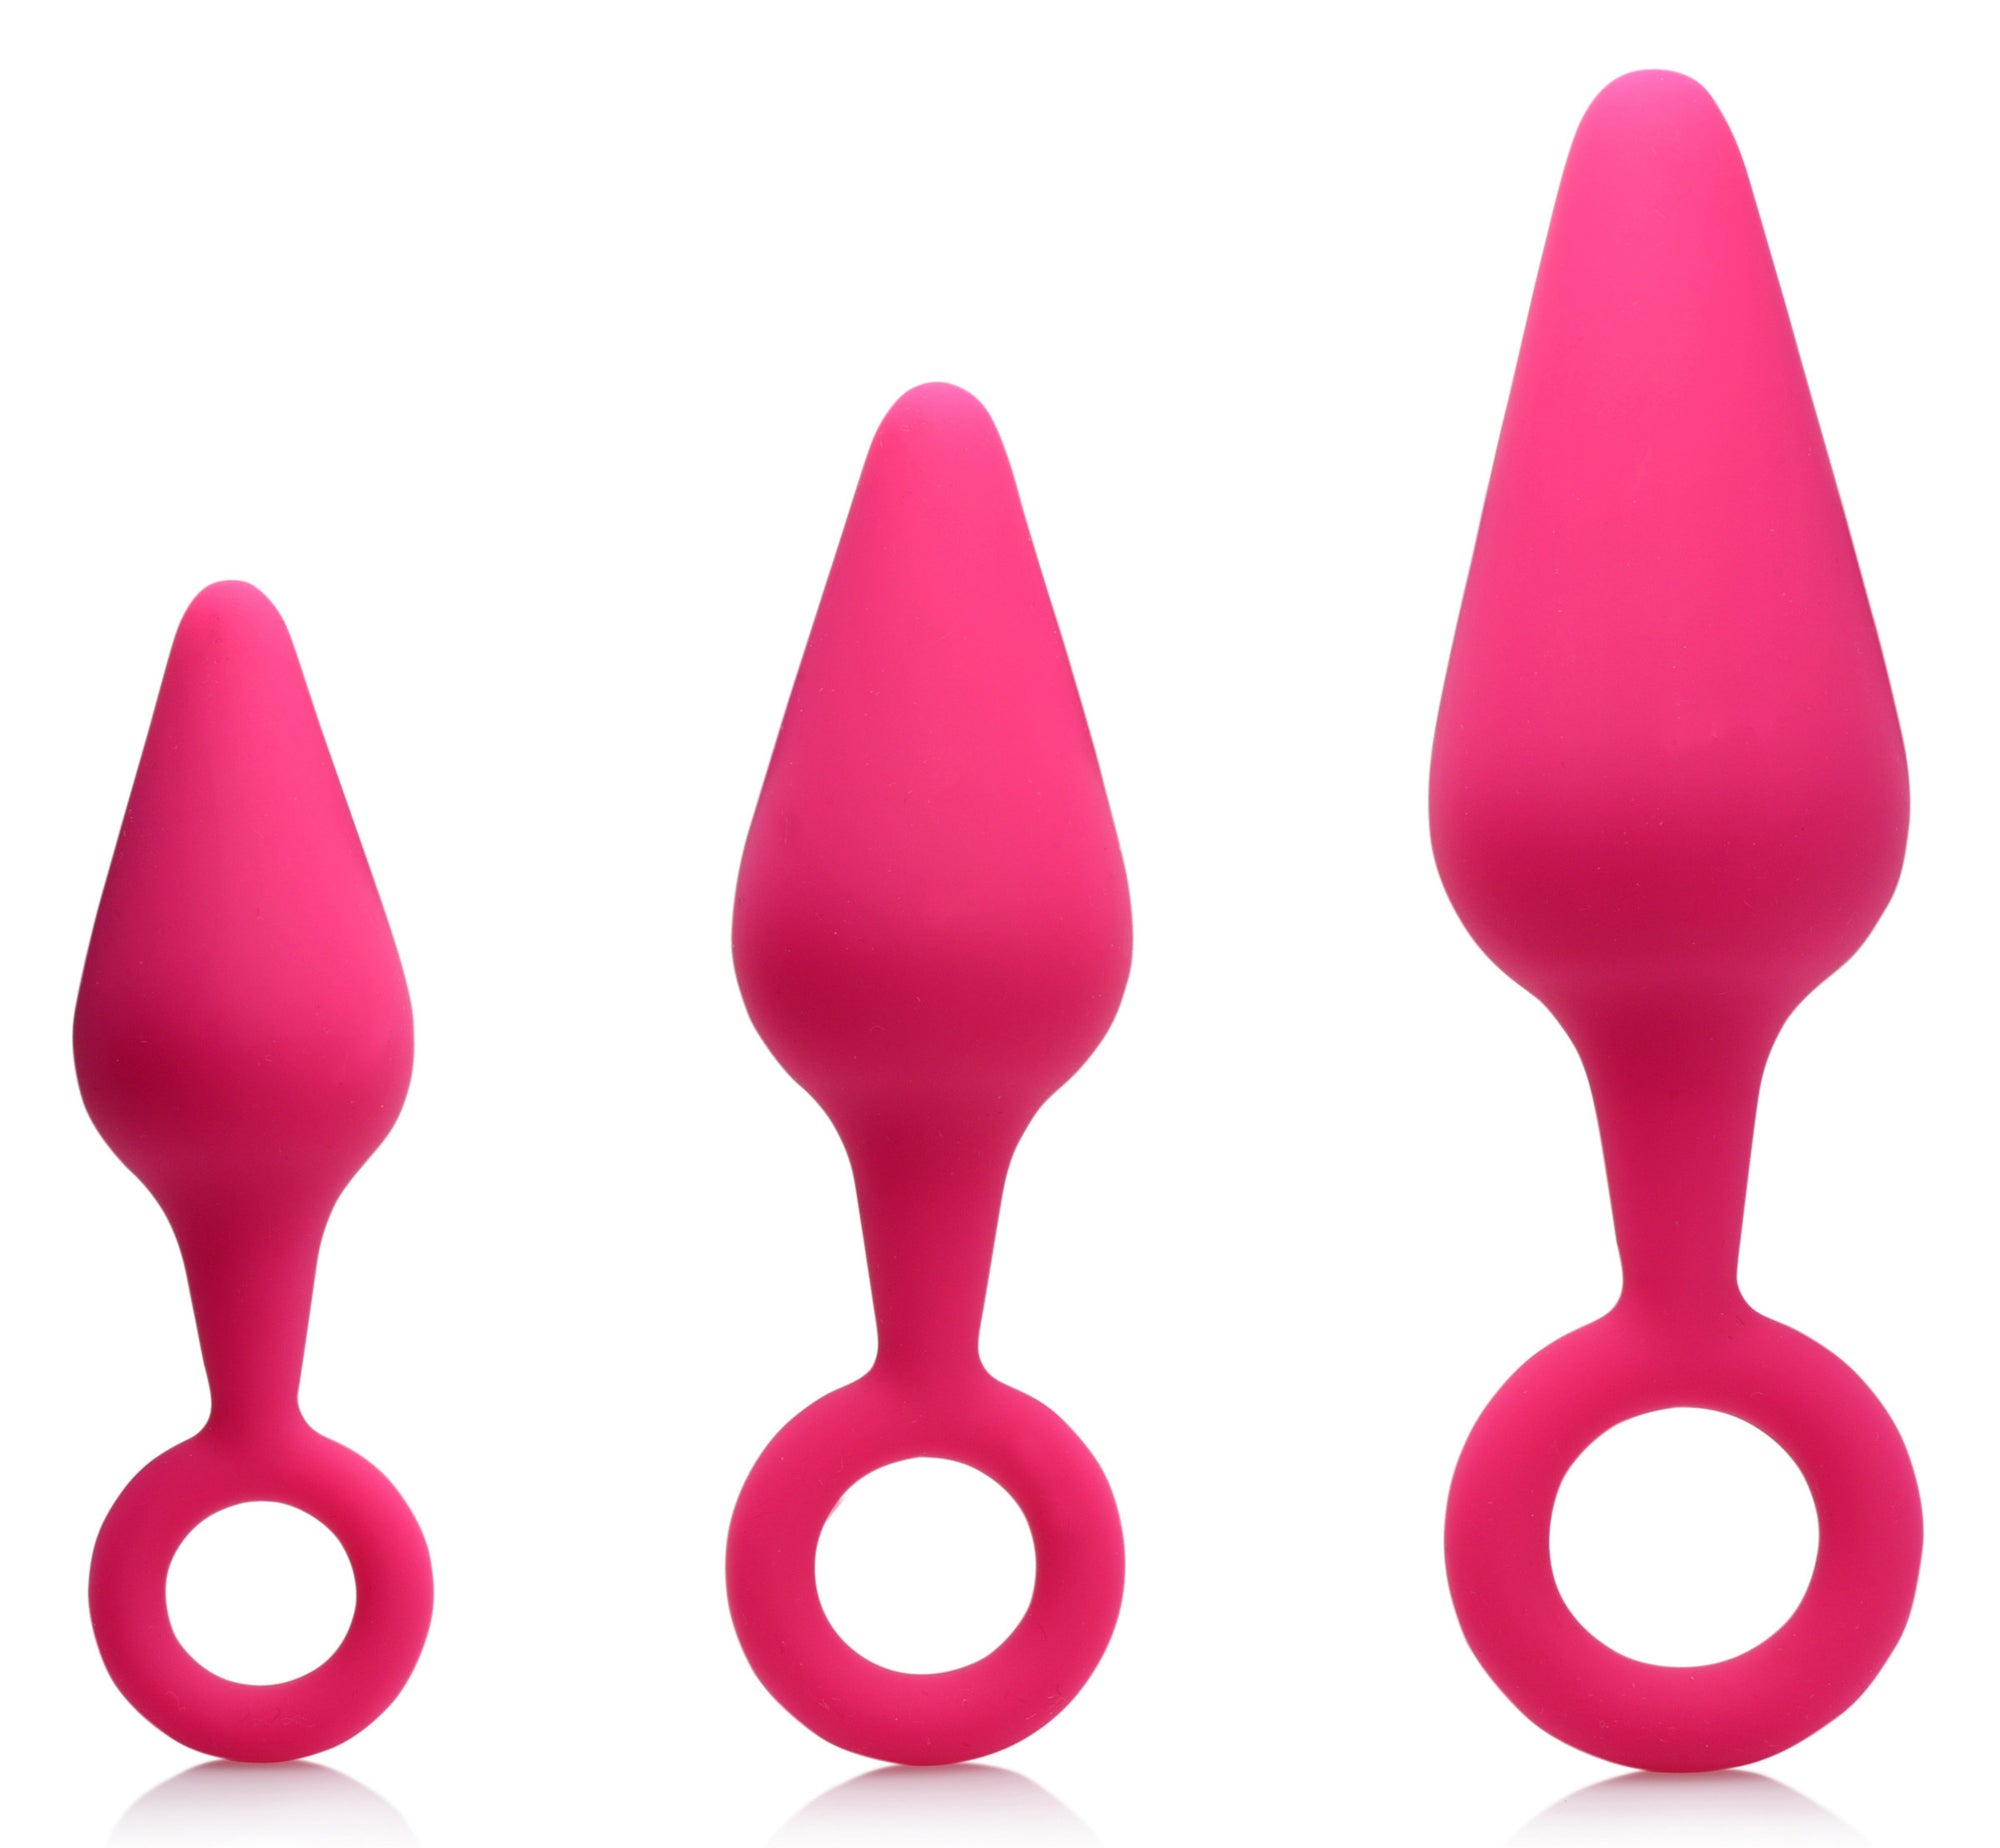 Rump Ringers 3 Piece Silicone Anal Plug Set - Pink 
Anal Toys
Gossip Cupid’s Secret Stash